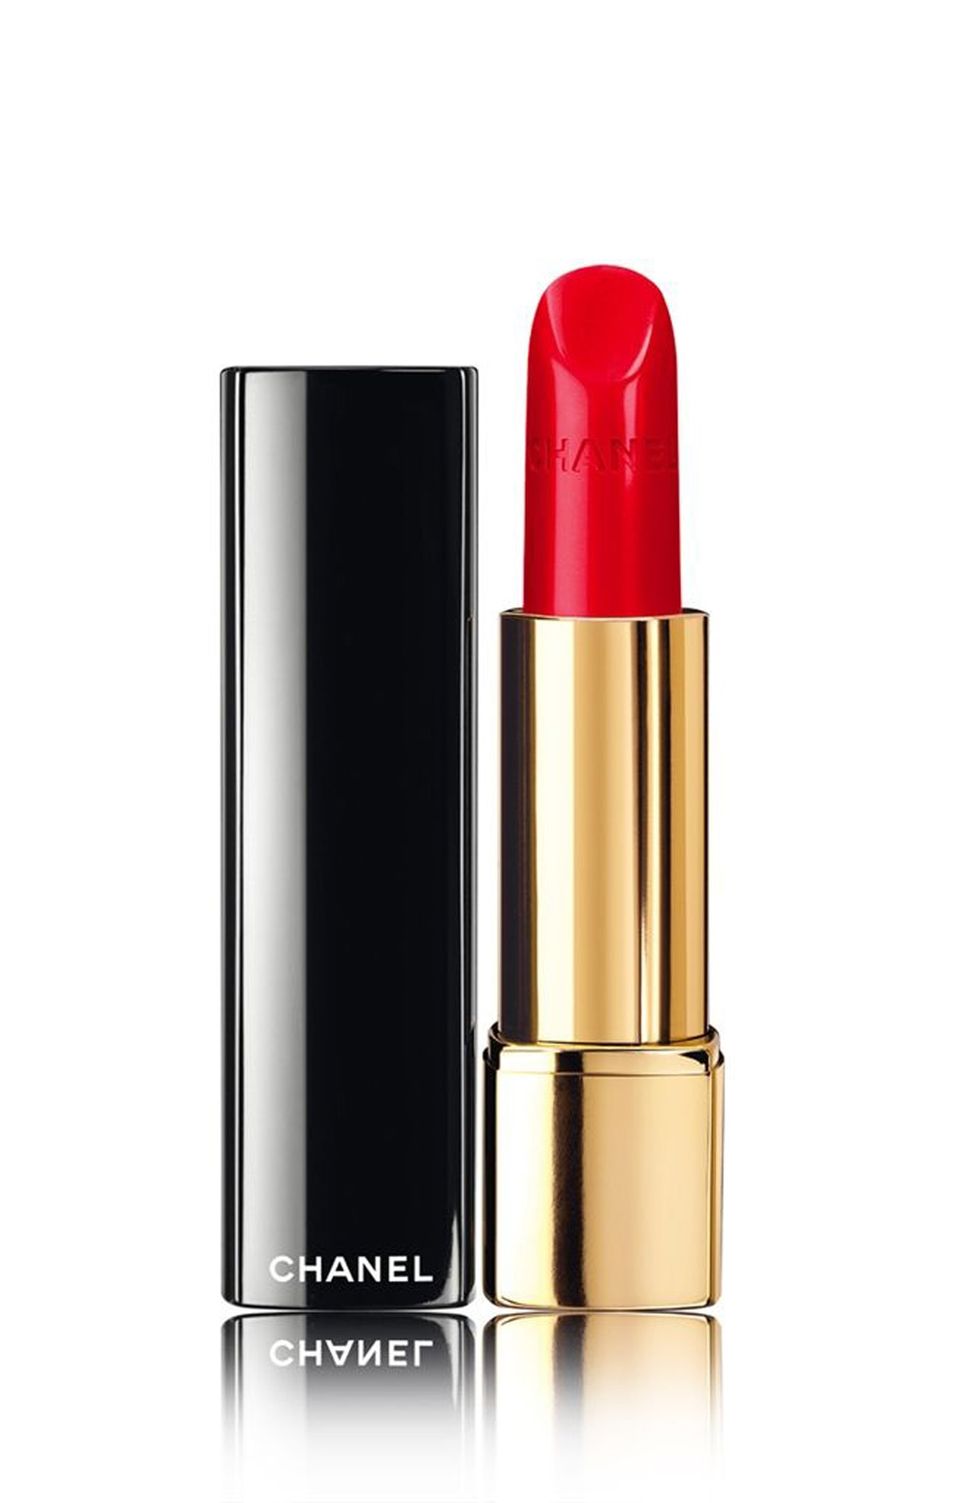 Chanel Red Lipsticks for All Skin Tones - 6 Flattering Red